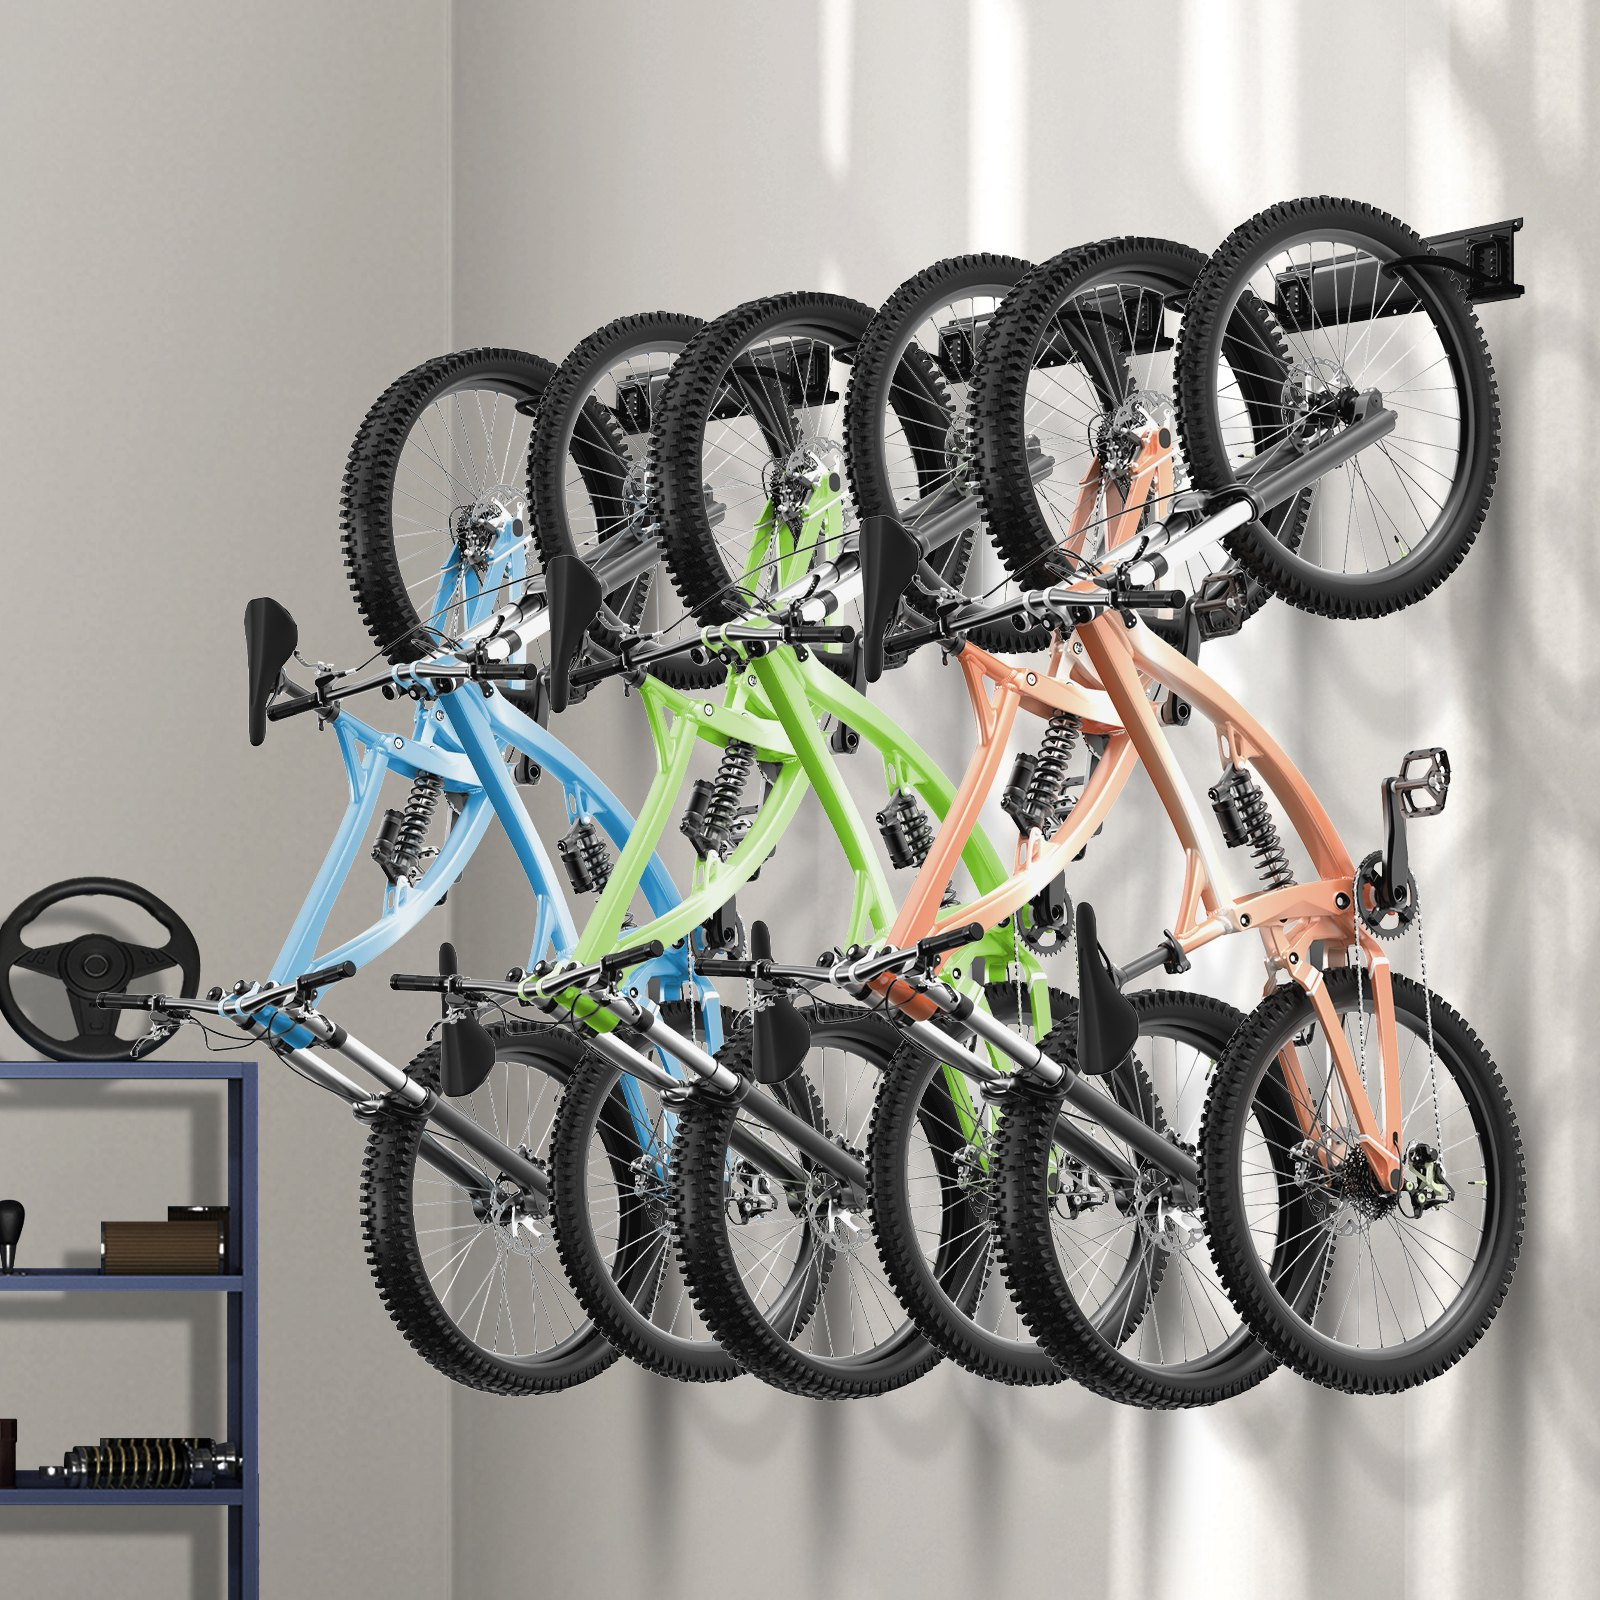 VEVOR Bike Storage Rack, 6 Bike Racks and 3 Helmets Hooks, Wall Mount Bike Storage Hanger, Home & Garage Organizer, Customizable for Various Bike Sizes, Adjustable Holder, Holds Up to 300 lbs, 51-inch, Goodies N Stuff